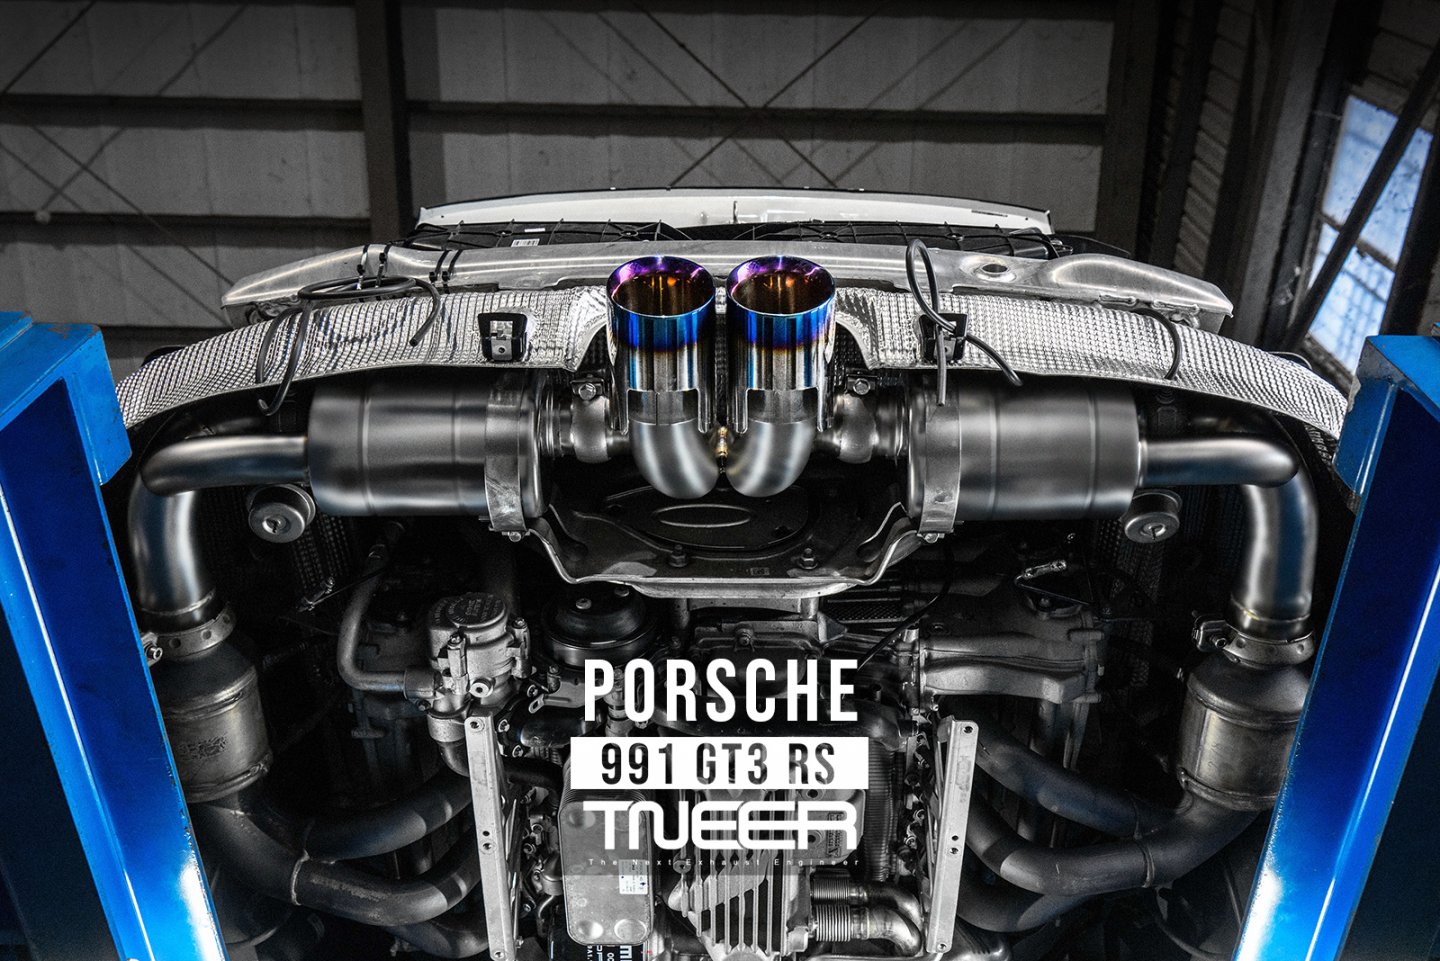 Porsche 991 GT3 / GT3 RS Titanium Special Edition TNEER Race Exhaust System